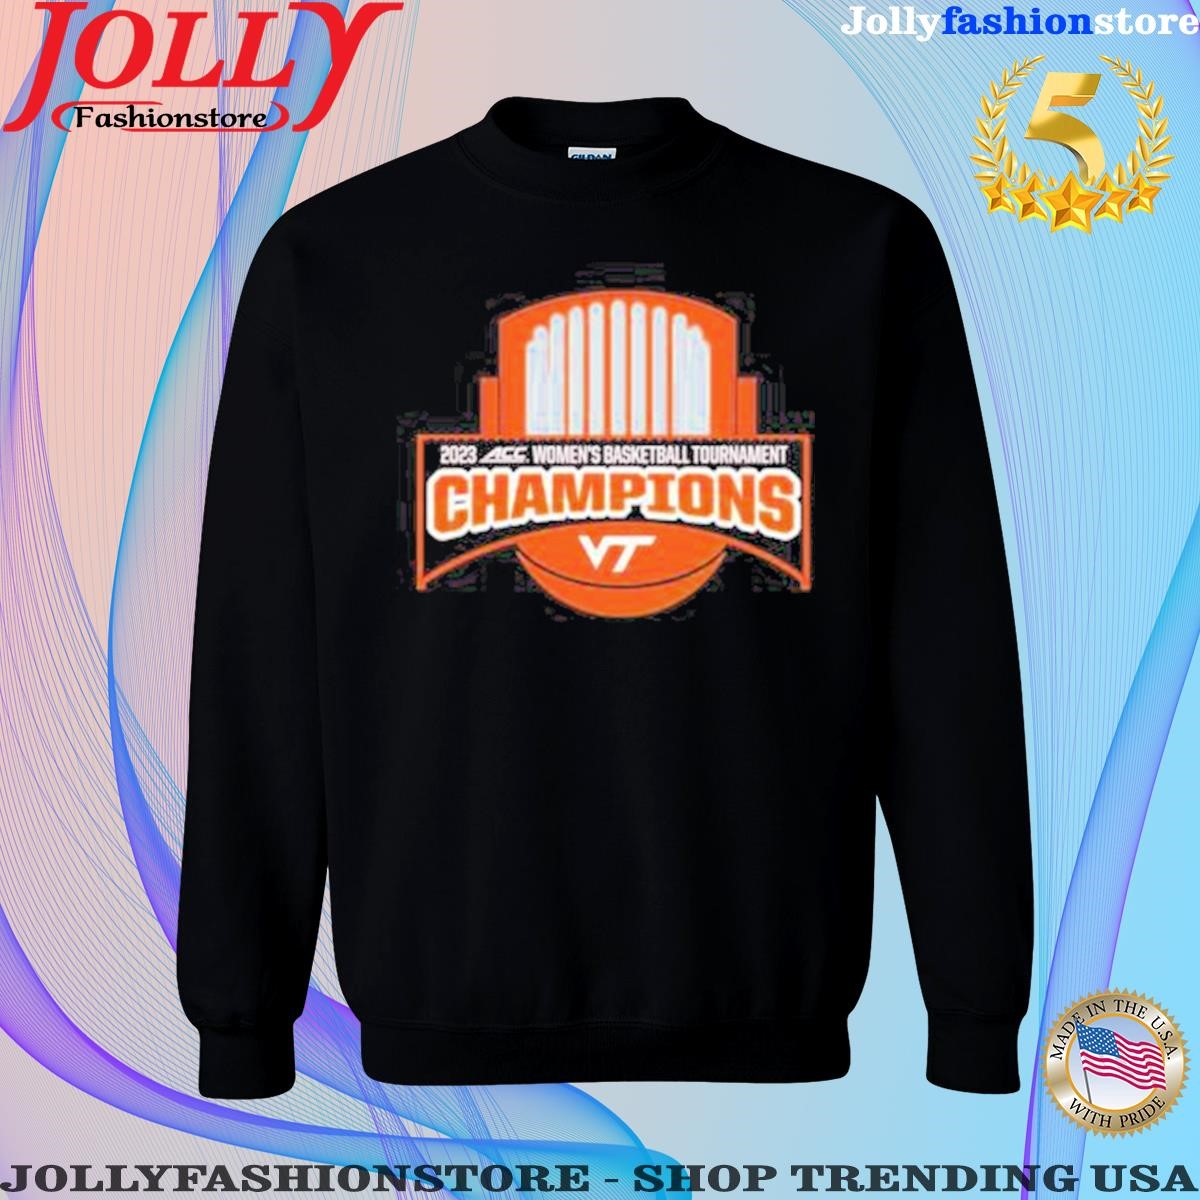 Official 2023 Acc Women’S Basketball Tournament Champions Virginia Tech Hokies shirt Sweatshirt.png